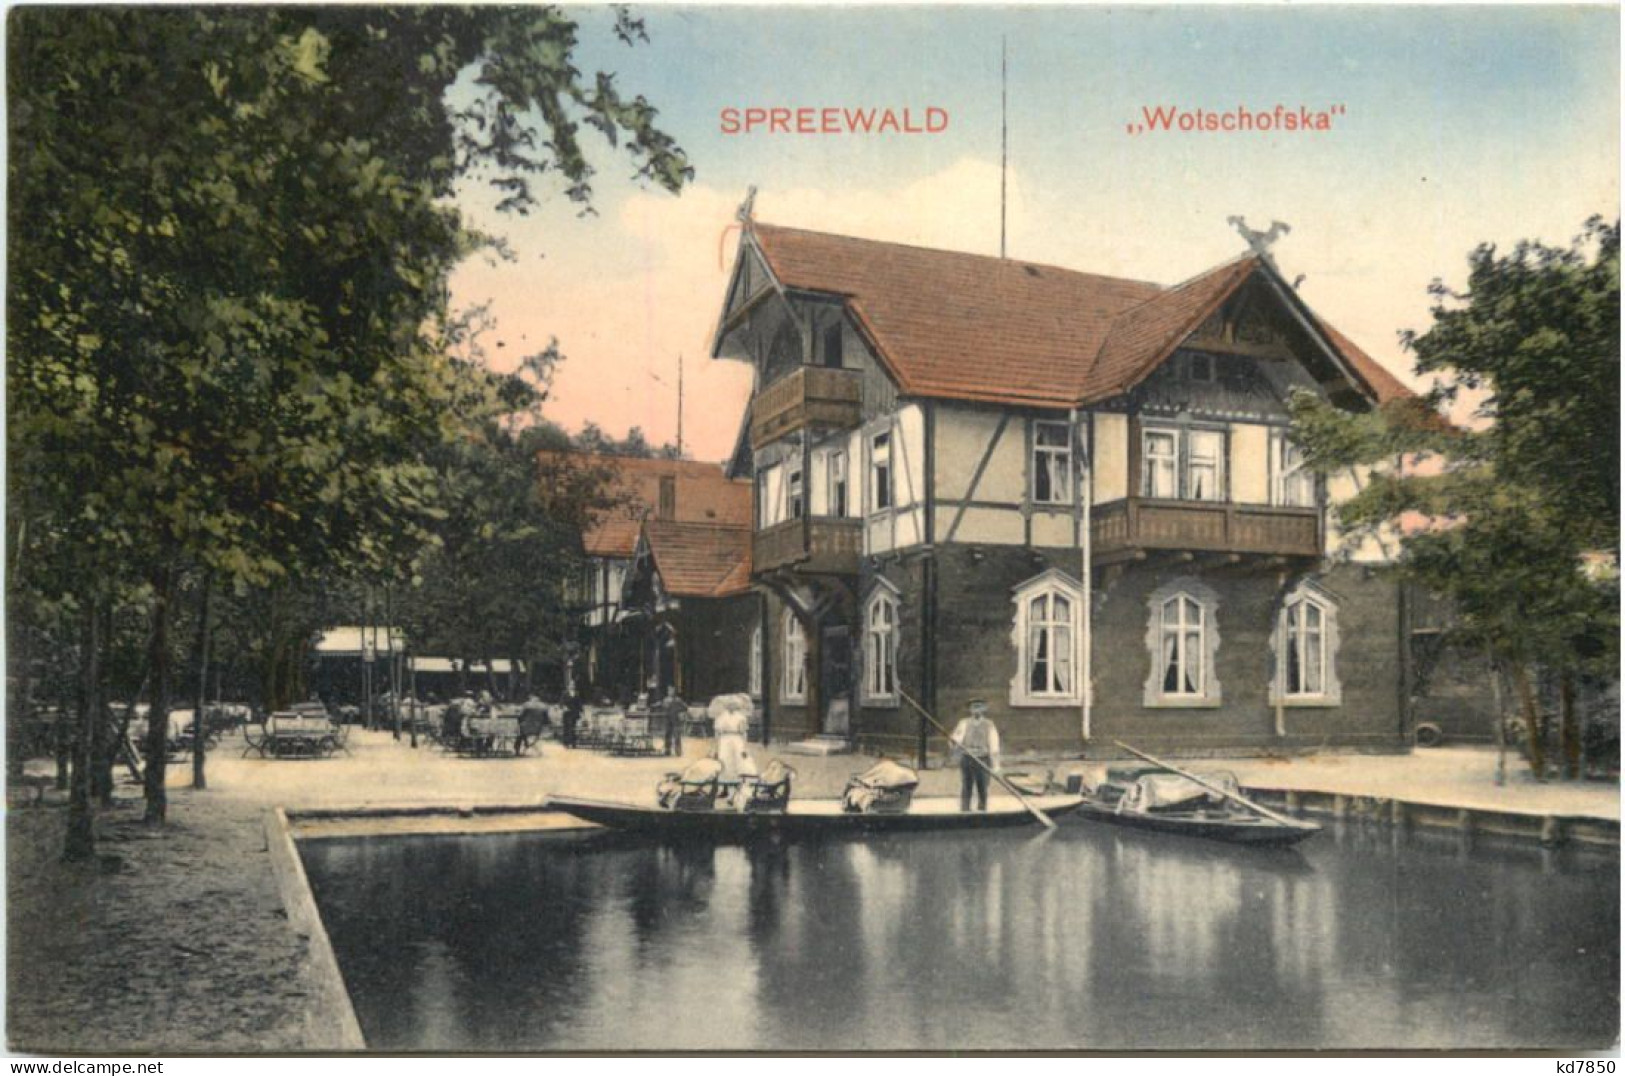 Spreewald - Wotschofska - Burg - Burg (Spreewald)